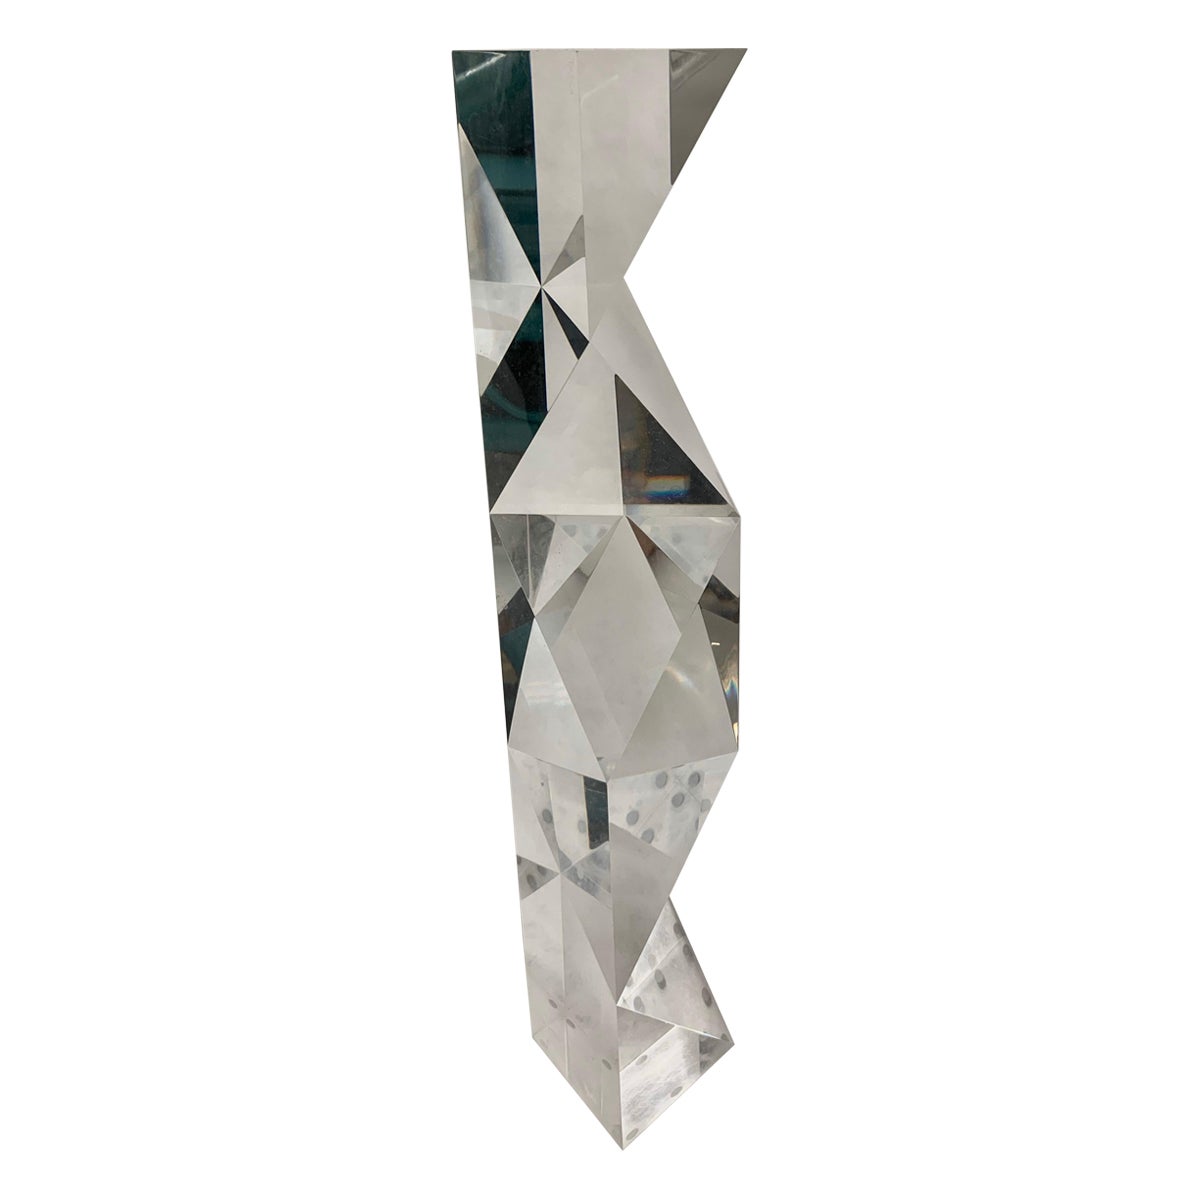 Alessio Tasca Italian Modern Abstract Lucite 'Fusina' Prism Sculpture